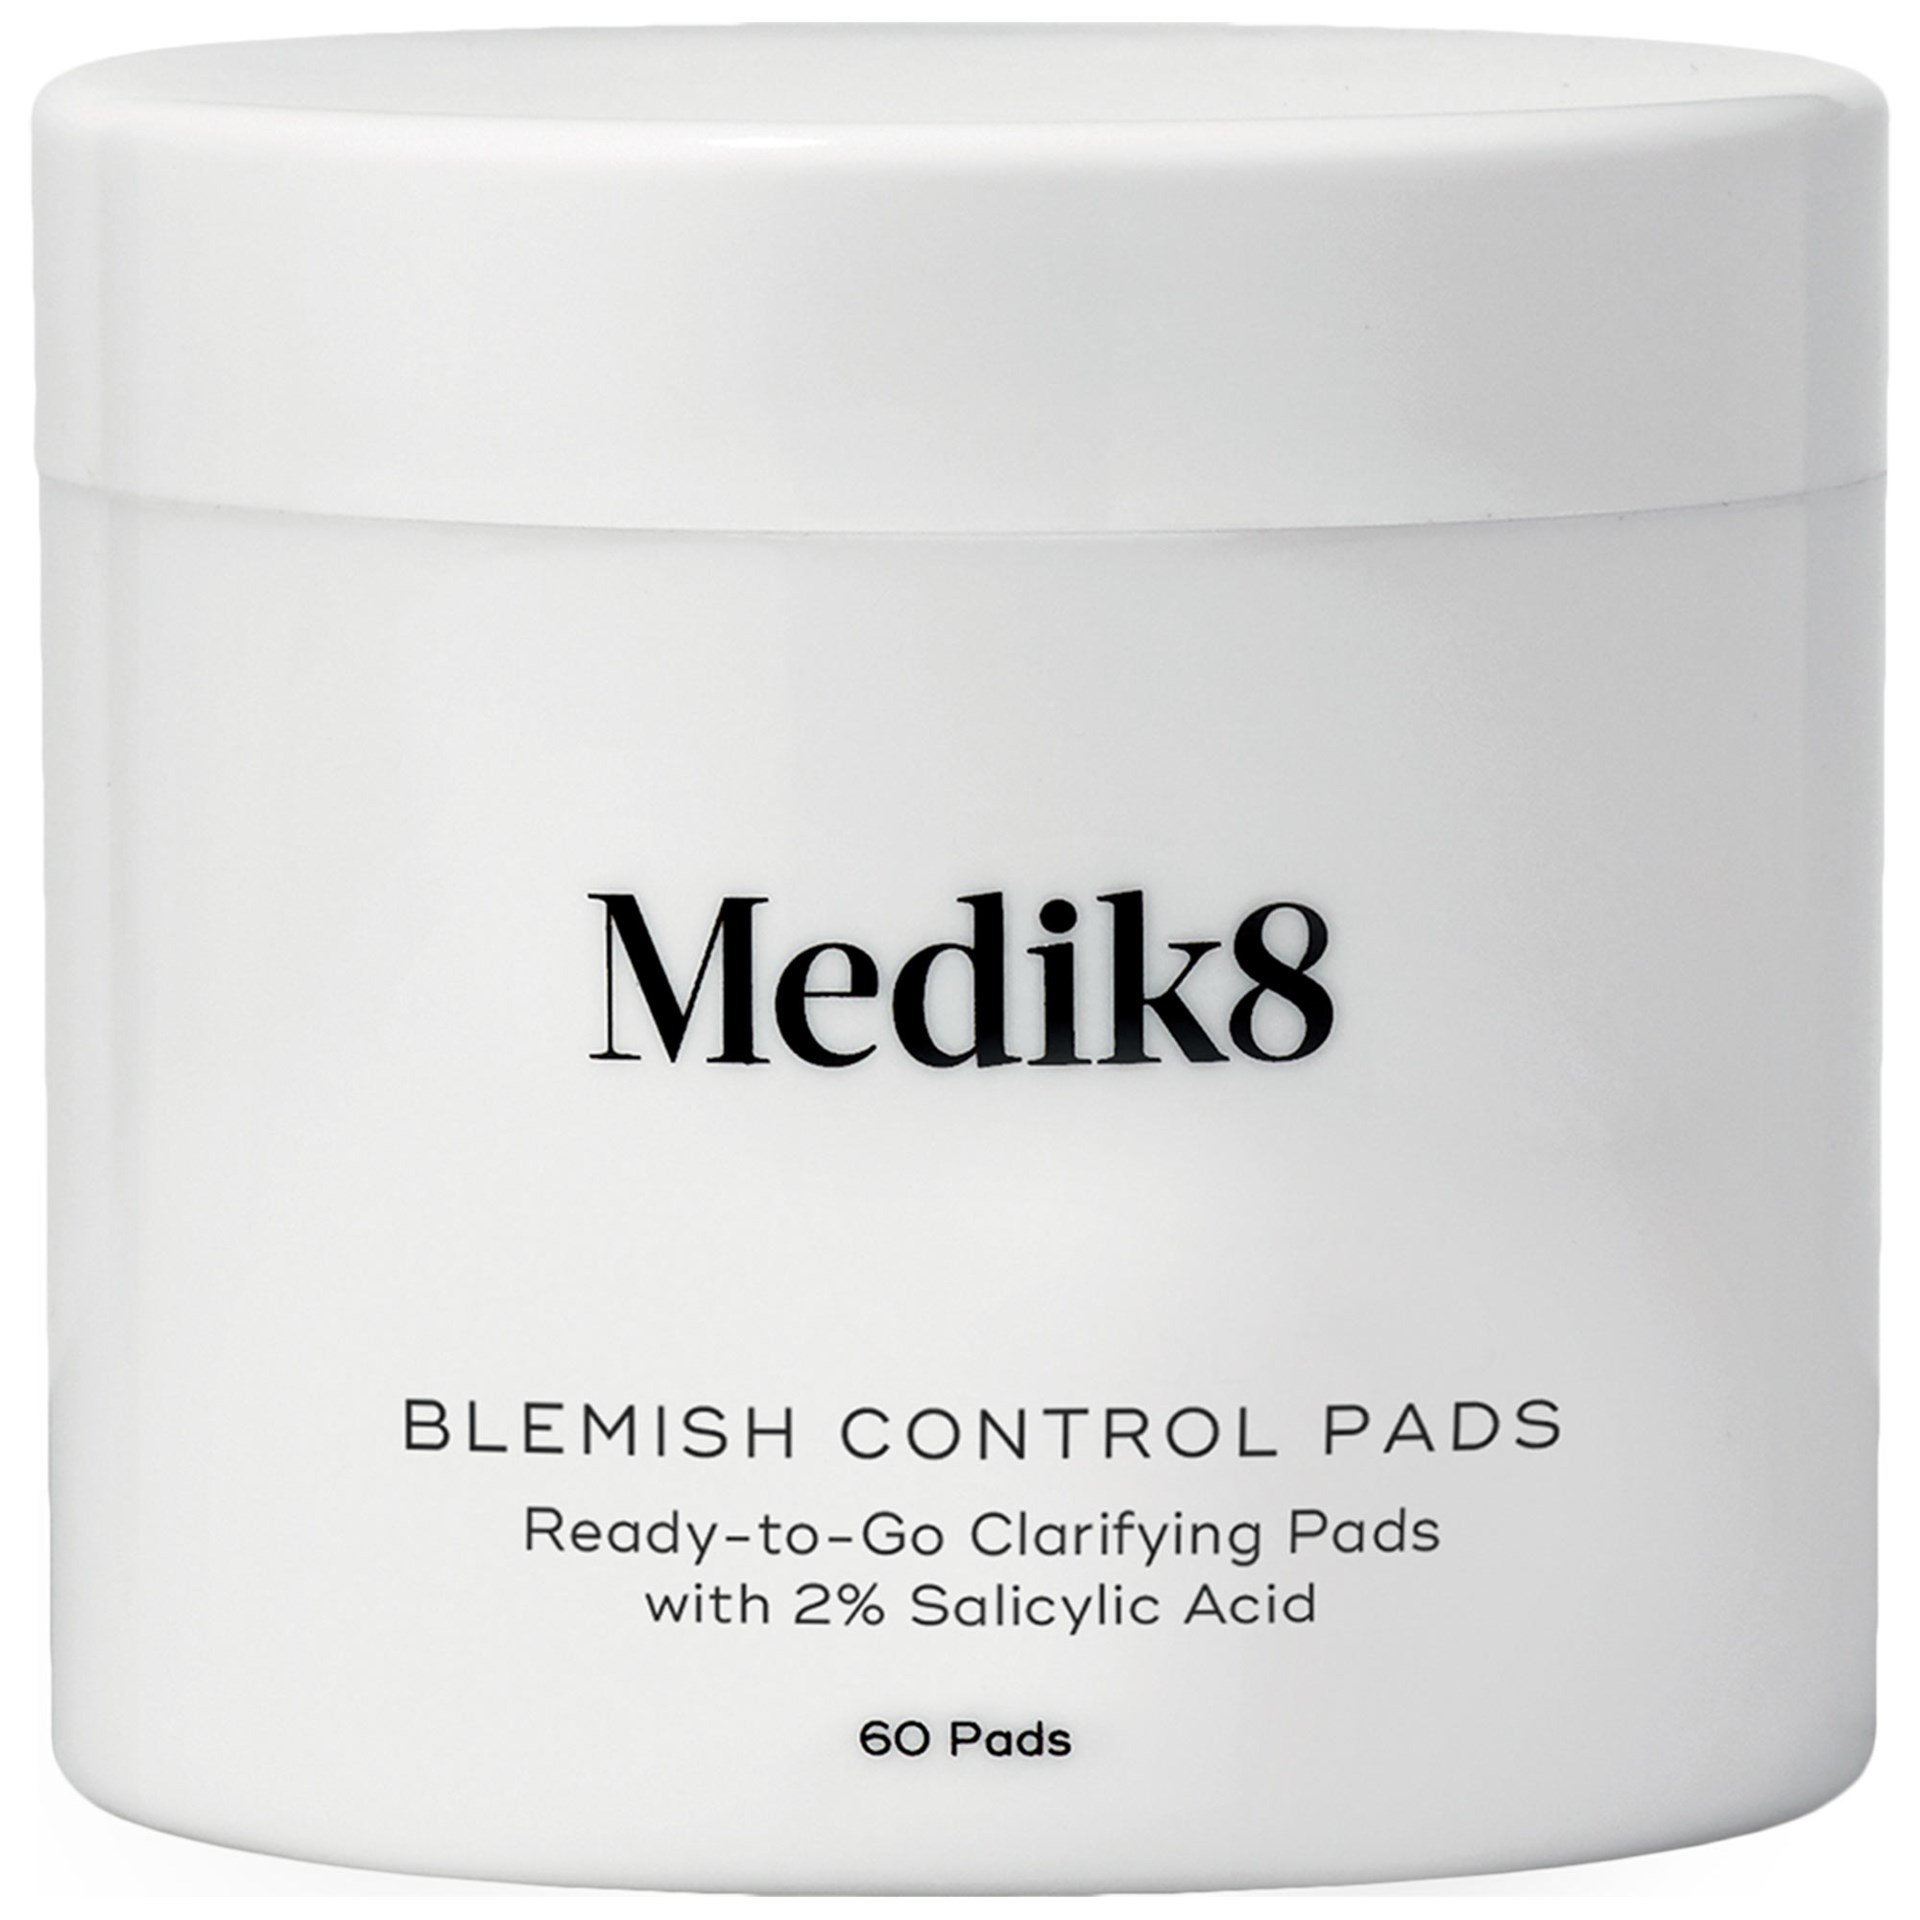 Medik8 Blemish Control Pads 